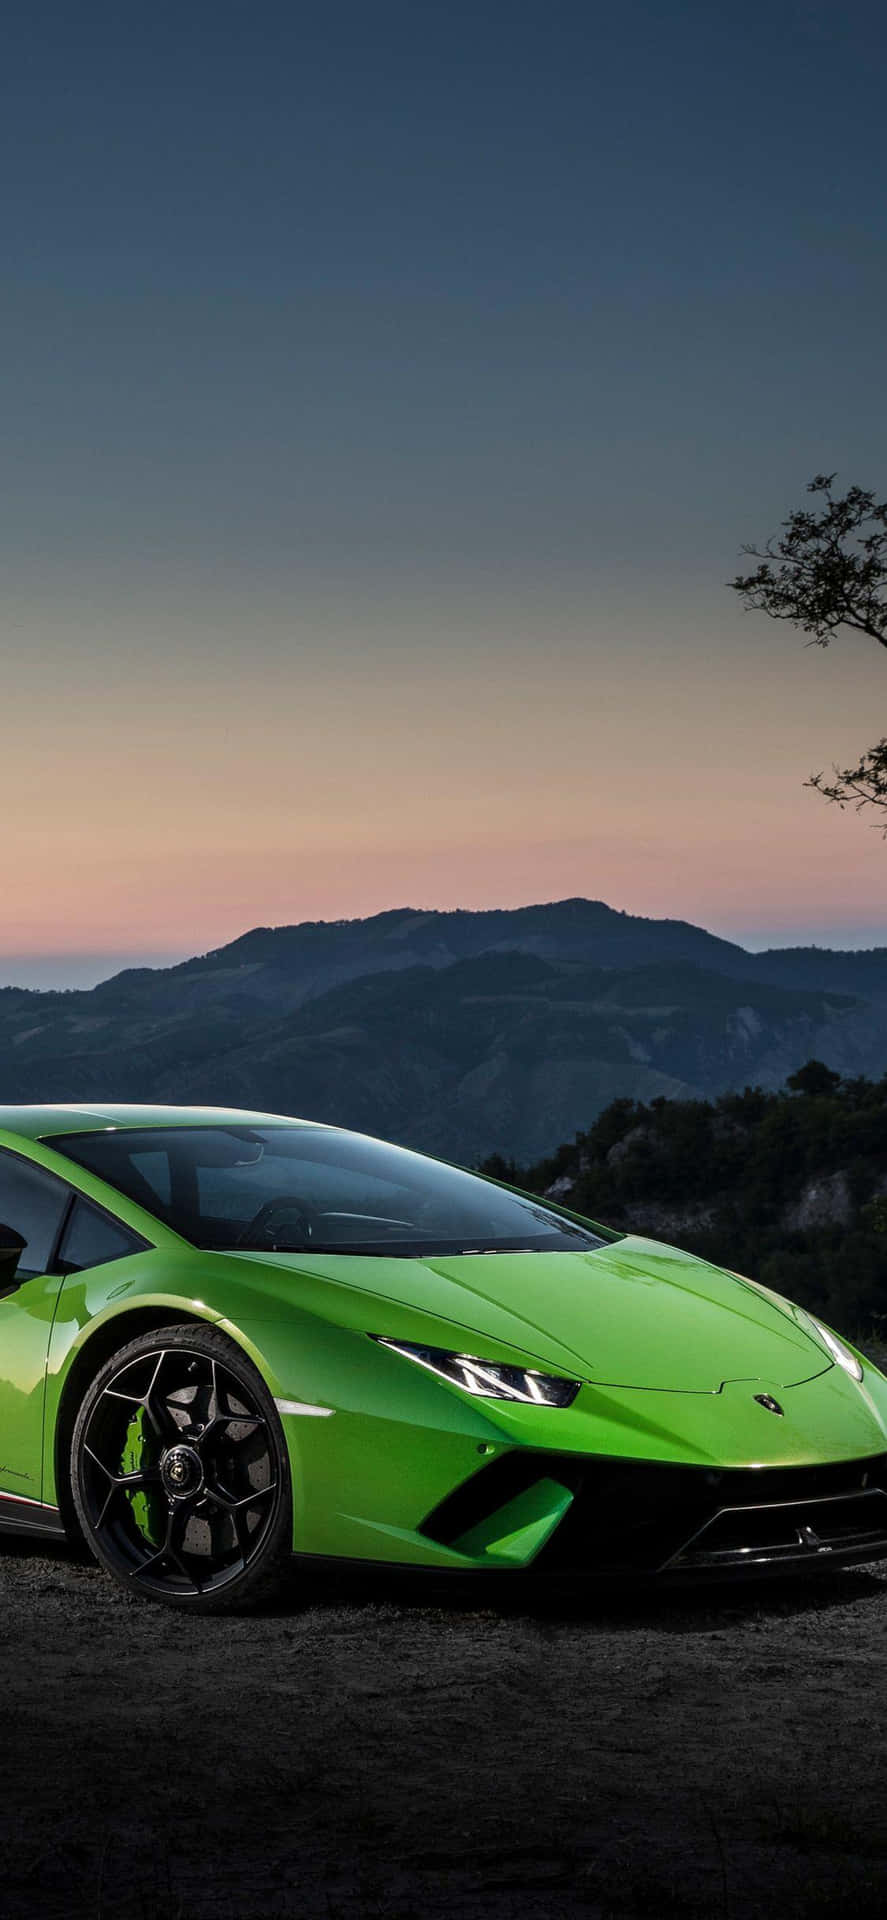 Grönsportbil Lamborghini Telefonen. Wallpaper